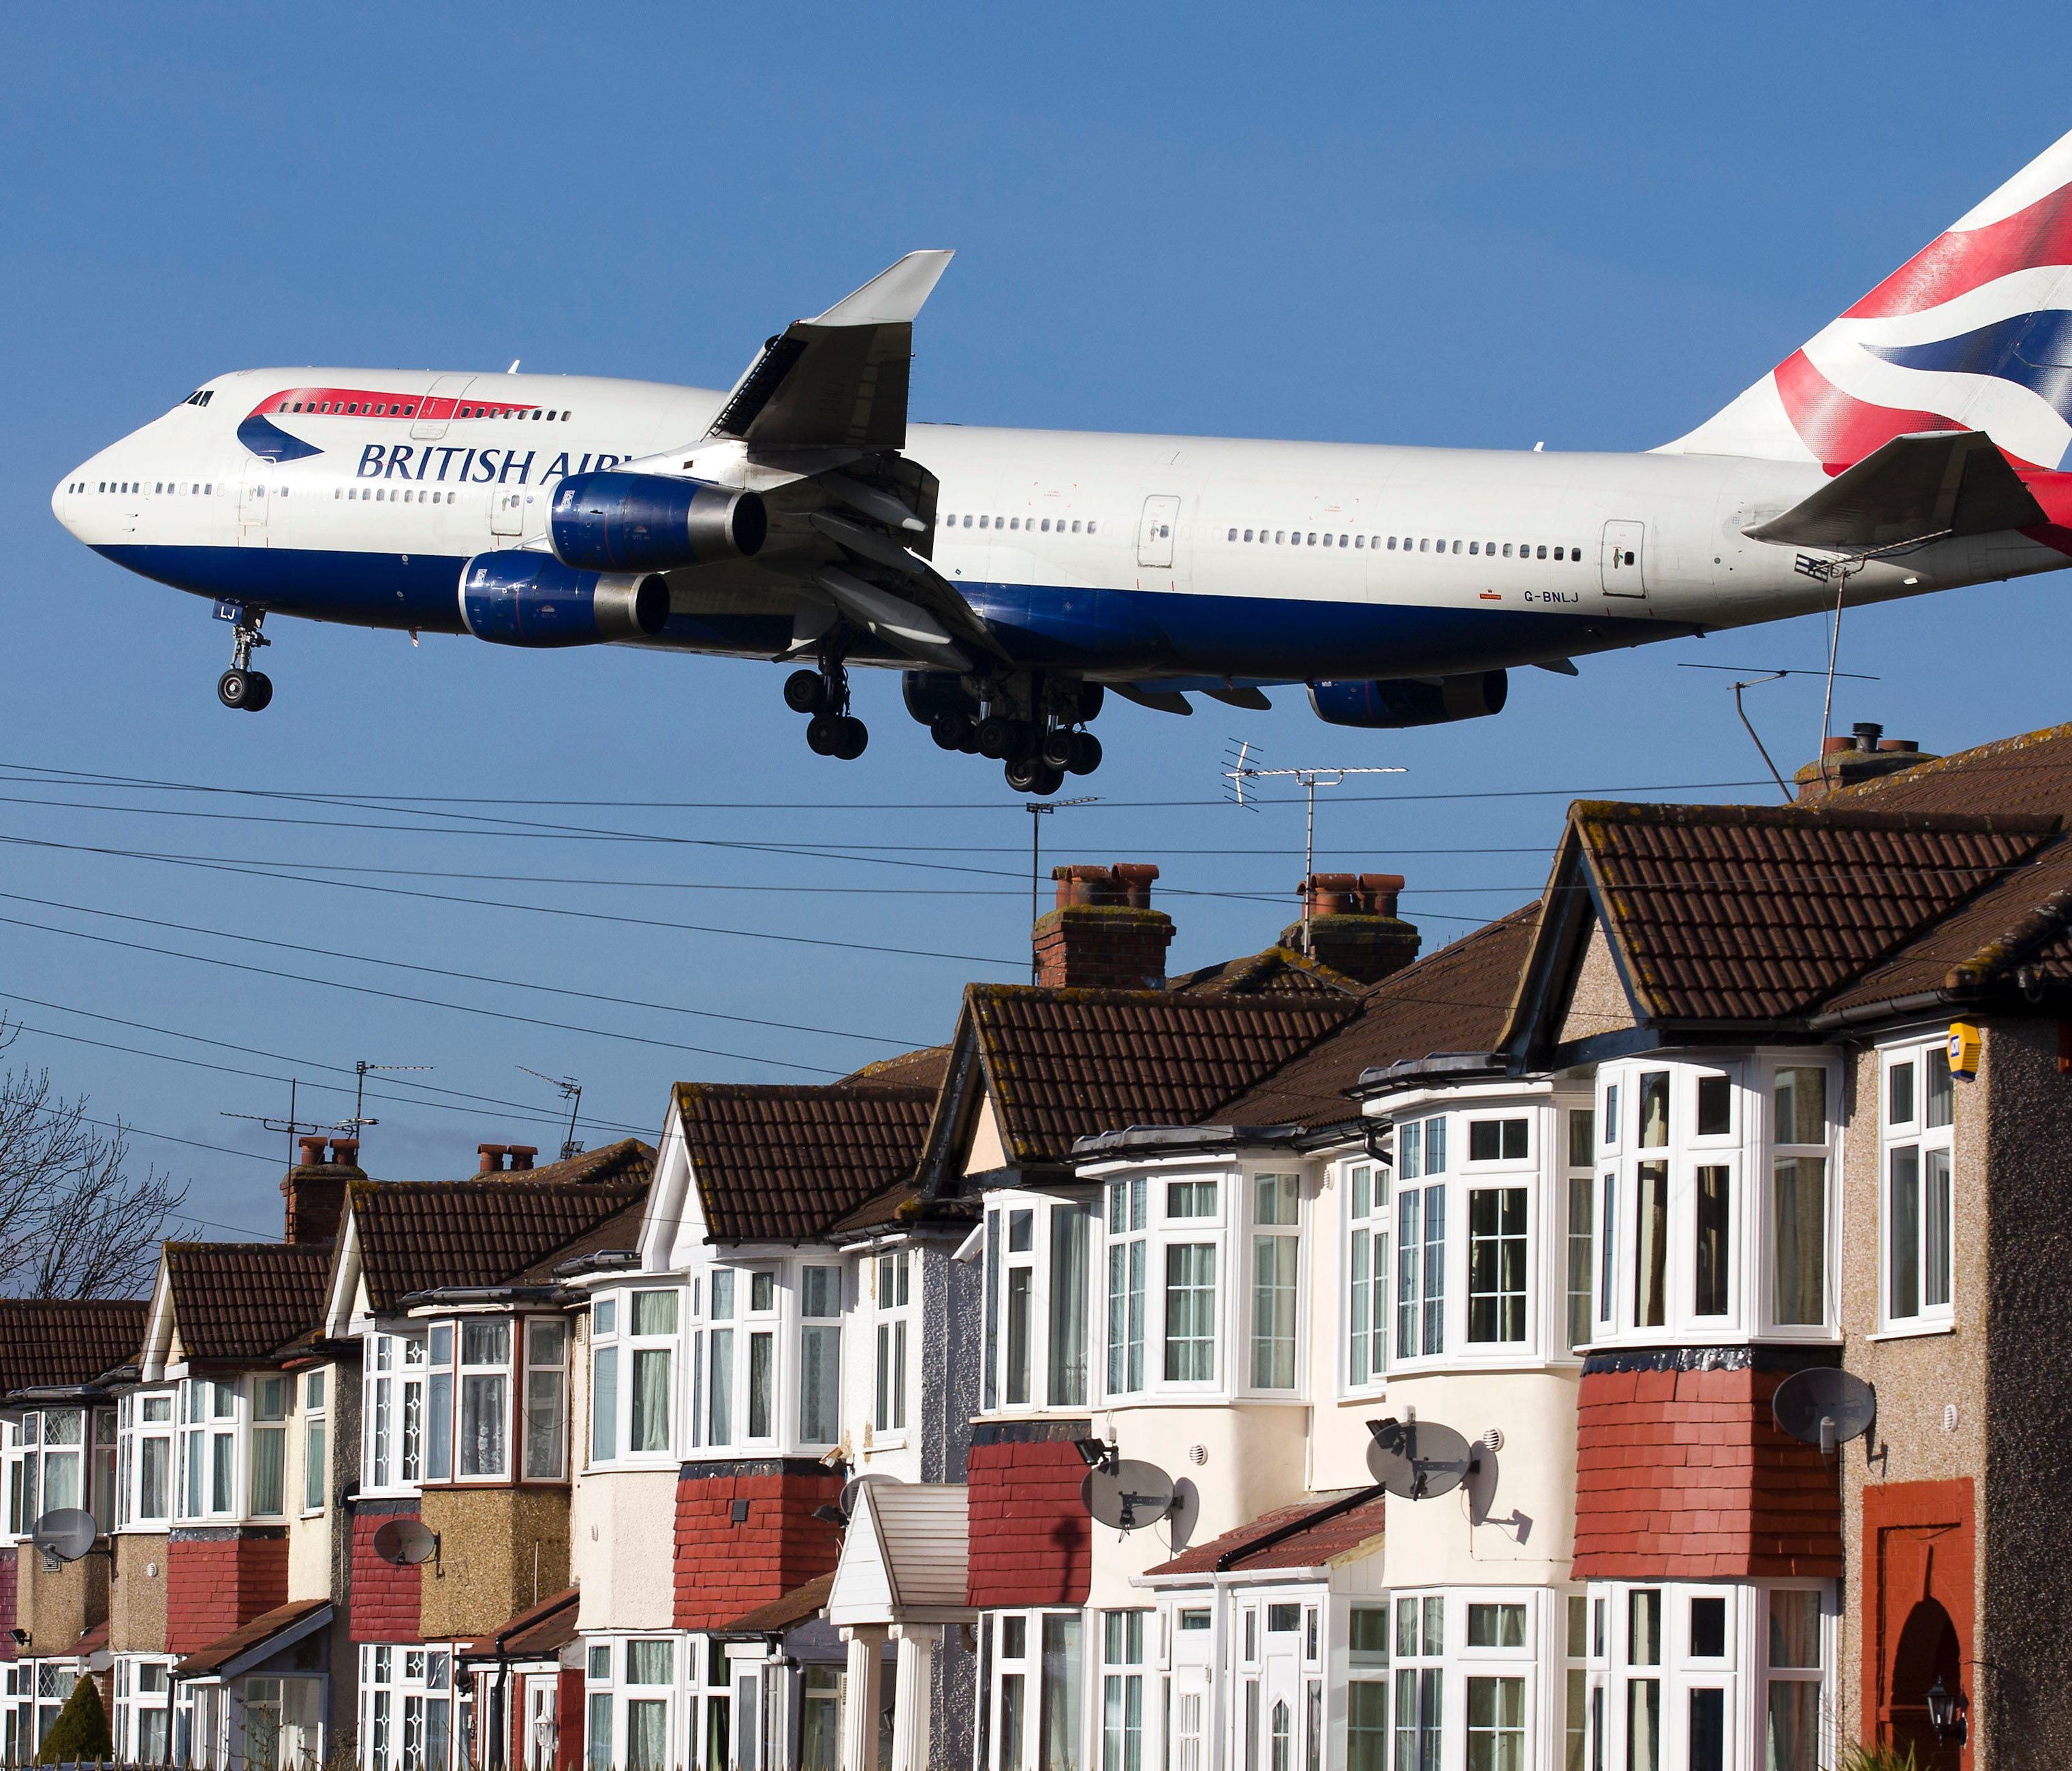 A British Airways 747 lands at London's Heathrow Airport on Feb. 18, 2015.